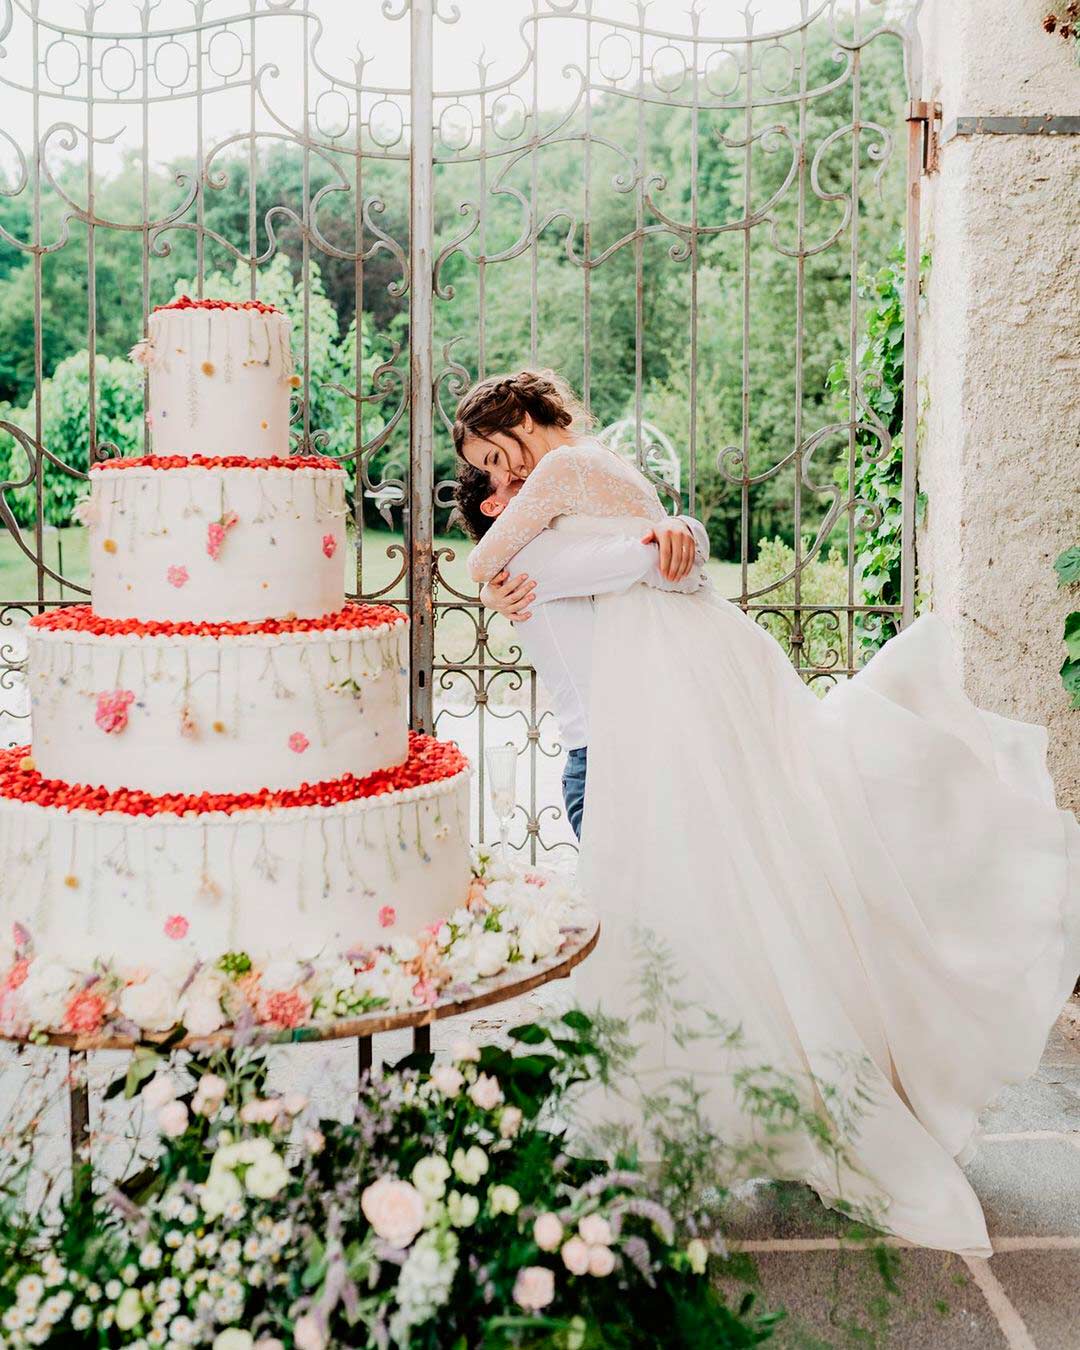 average price of a wedding cake white red bride groom